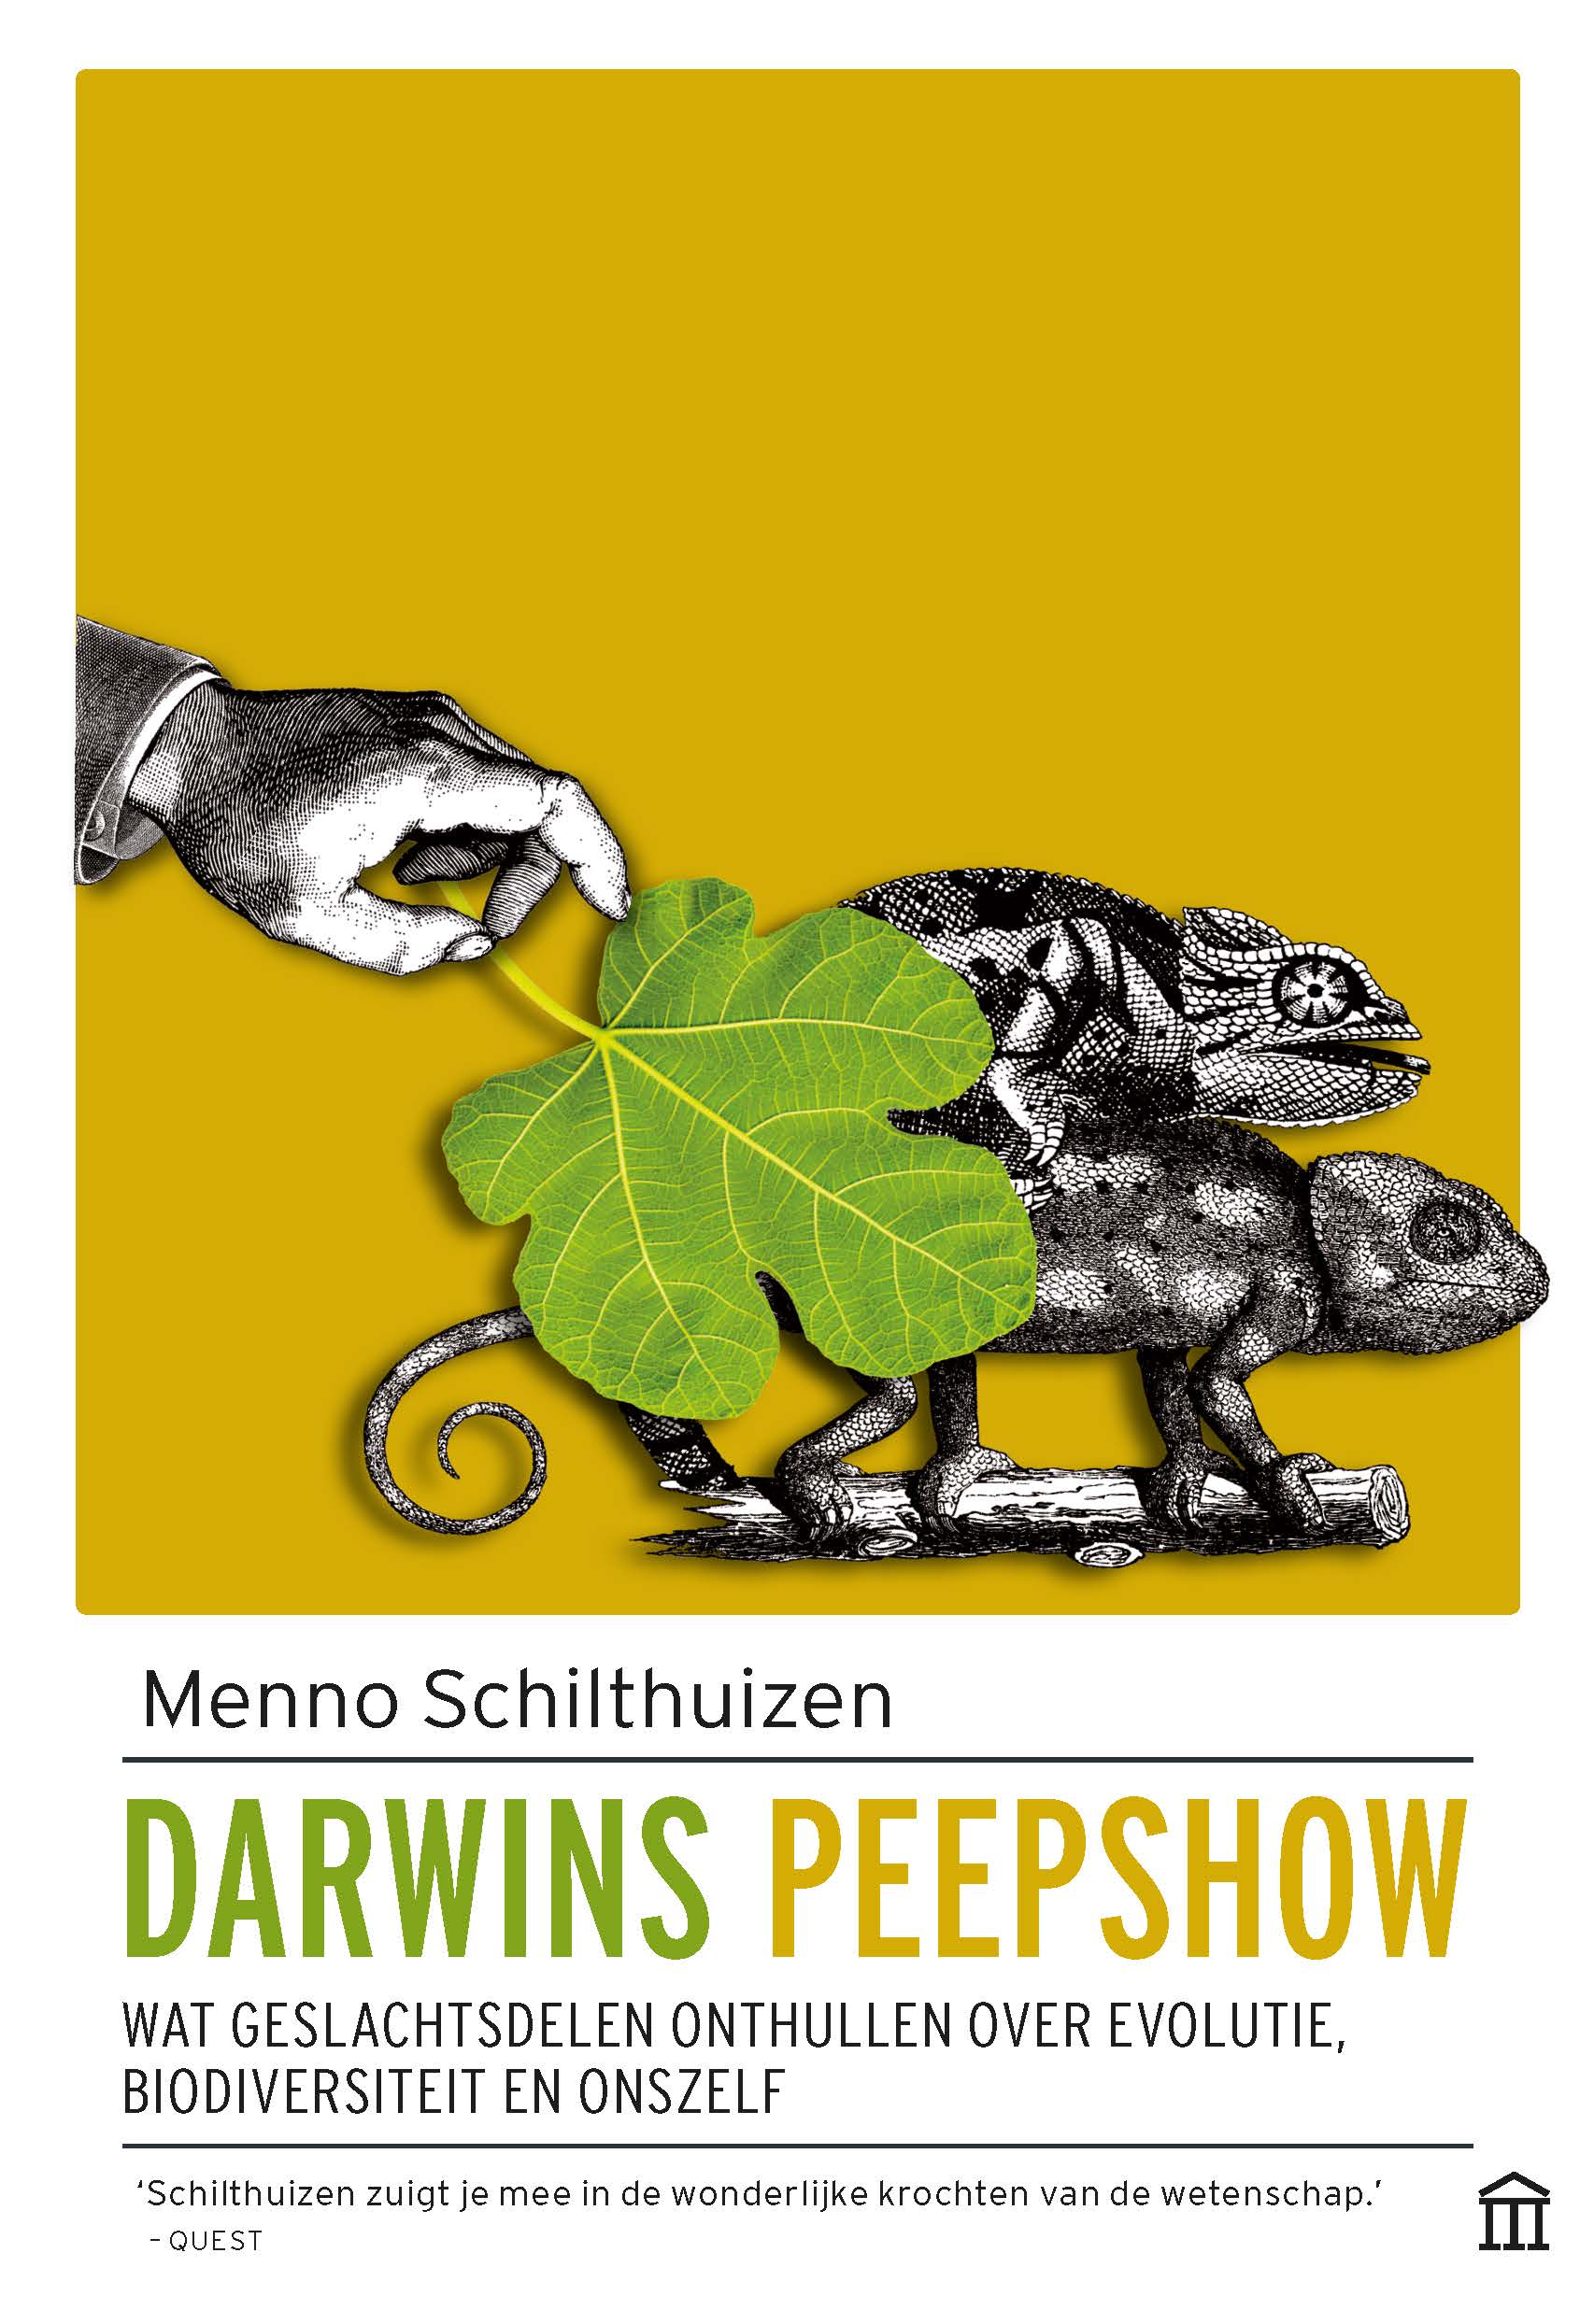 Darwins peepshow